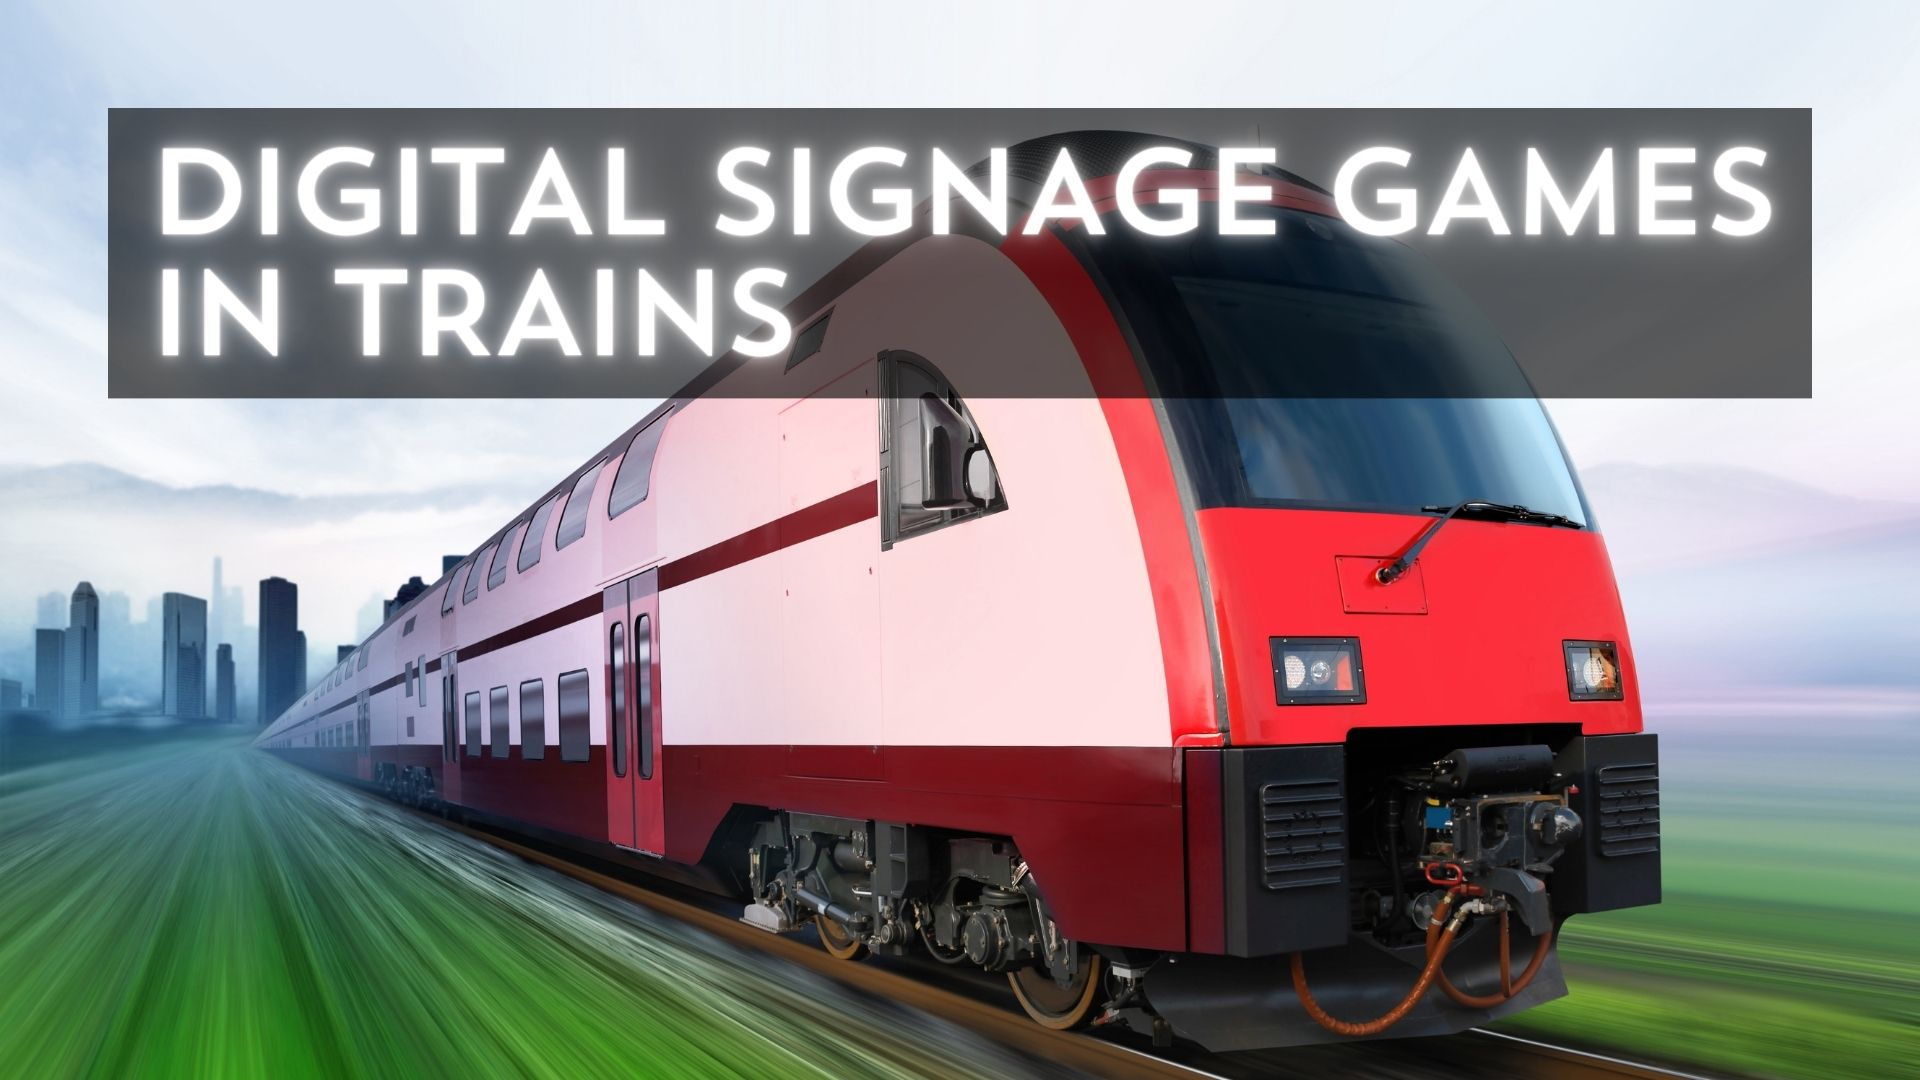 Digital signage games in trains